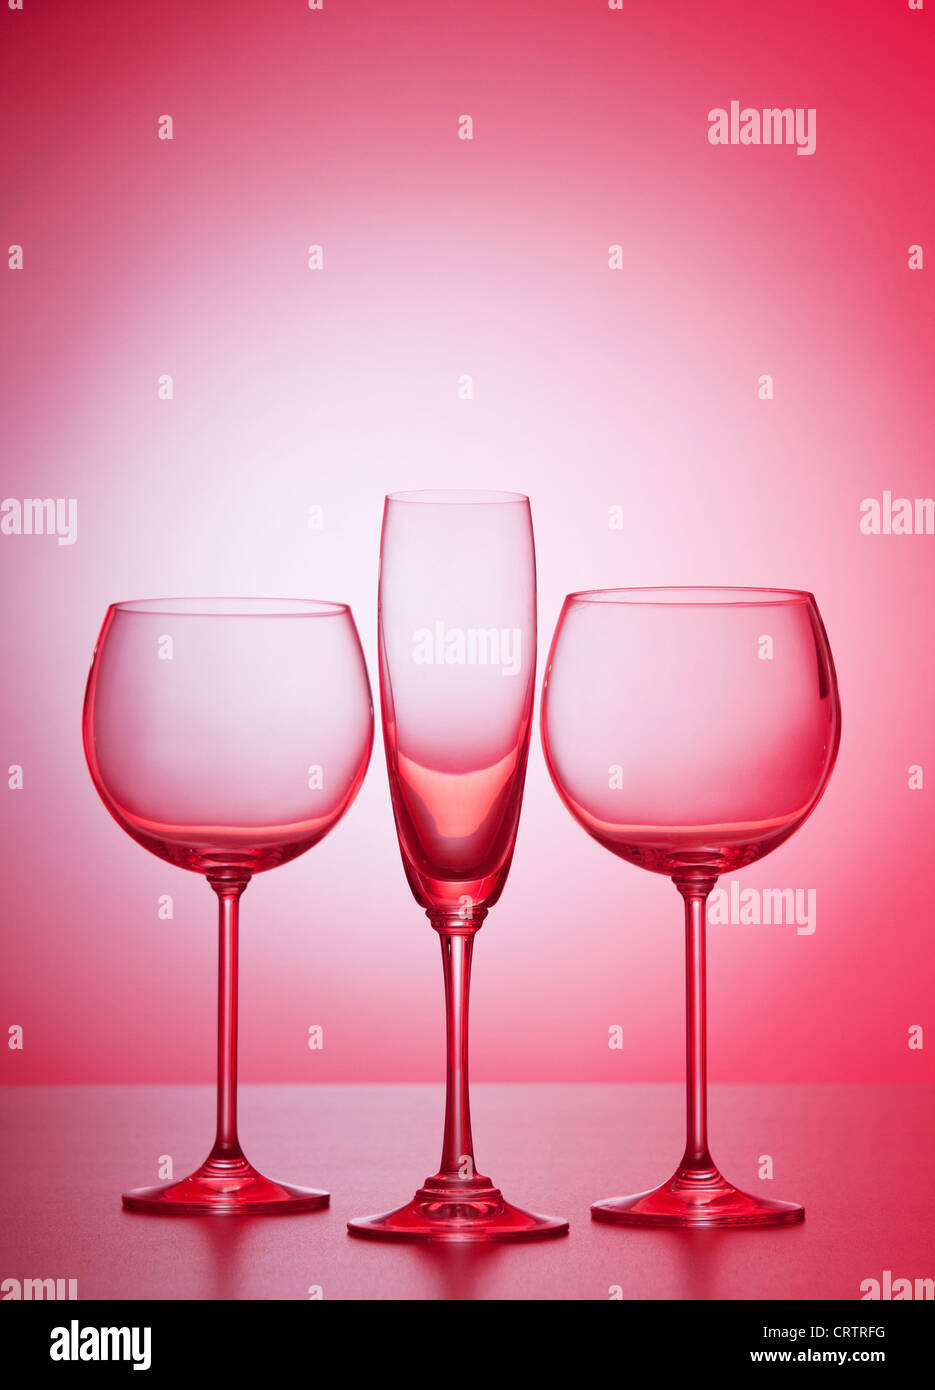 Wine glasses against gradient background Stock Photo